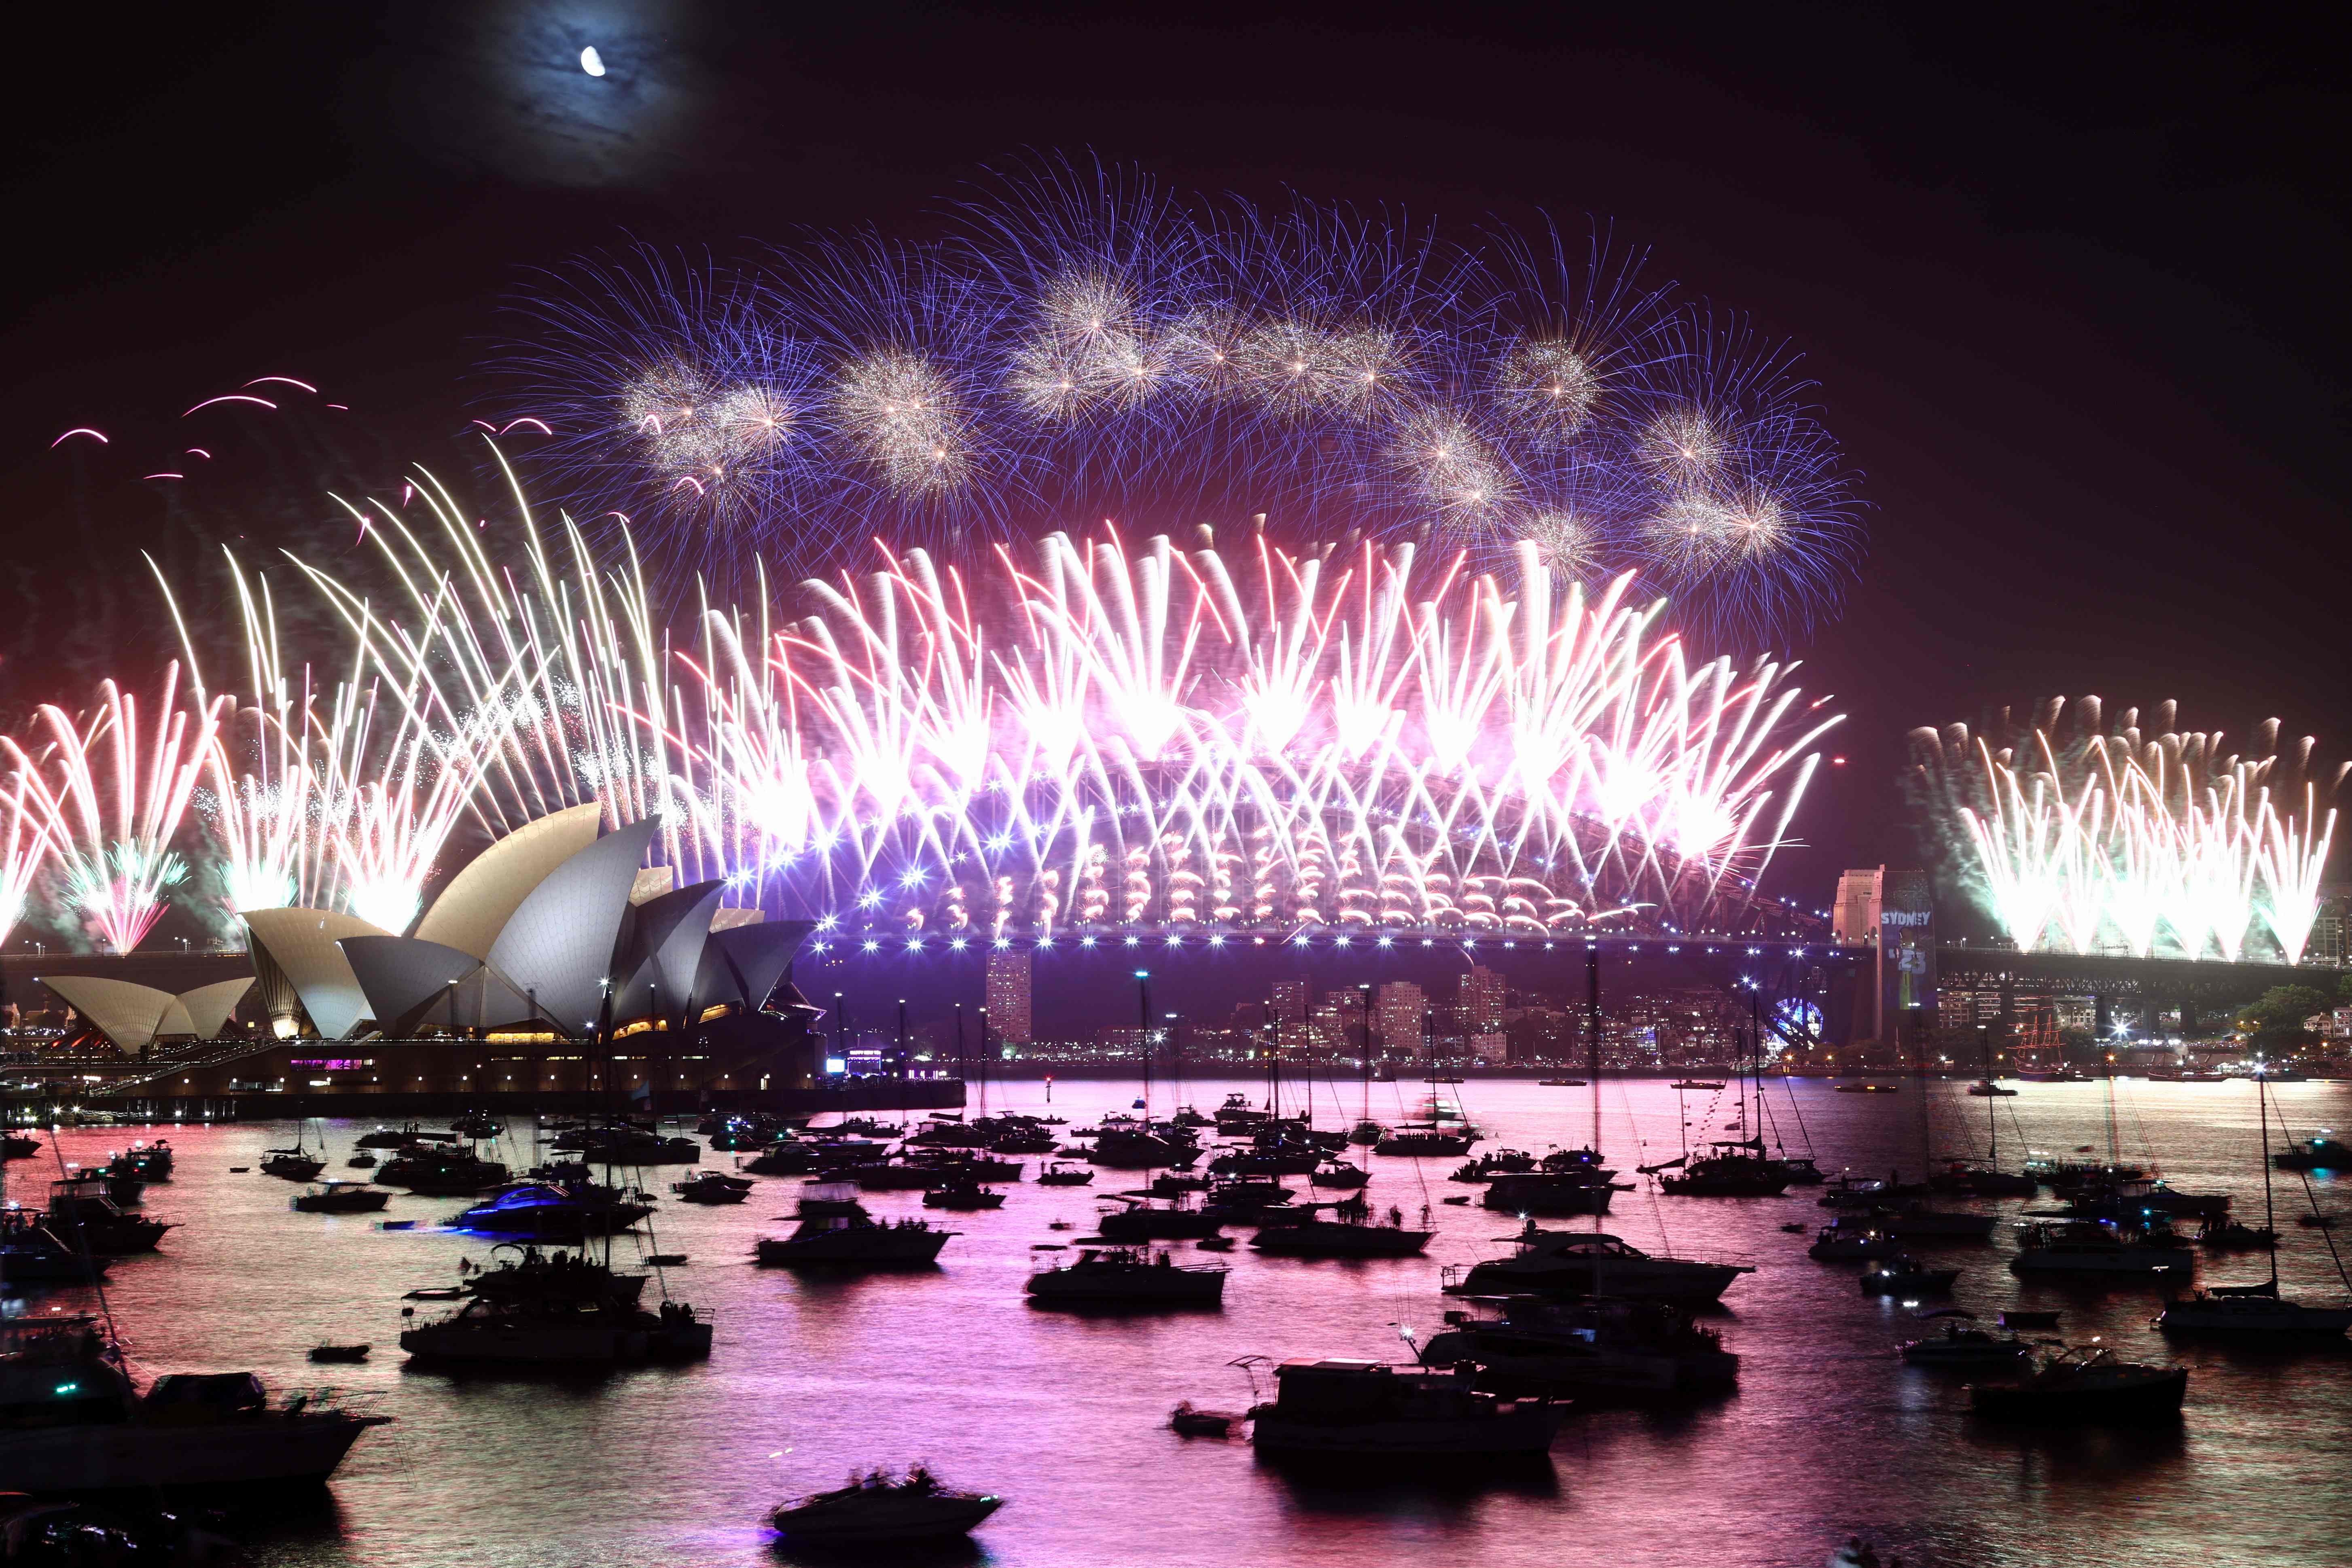 Silvesterfeuerwerk erleuchtet den Himmel über dem Sydney Opera House